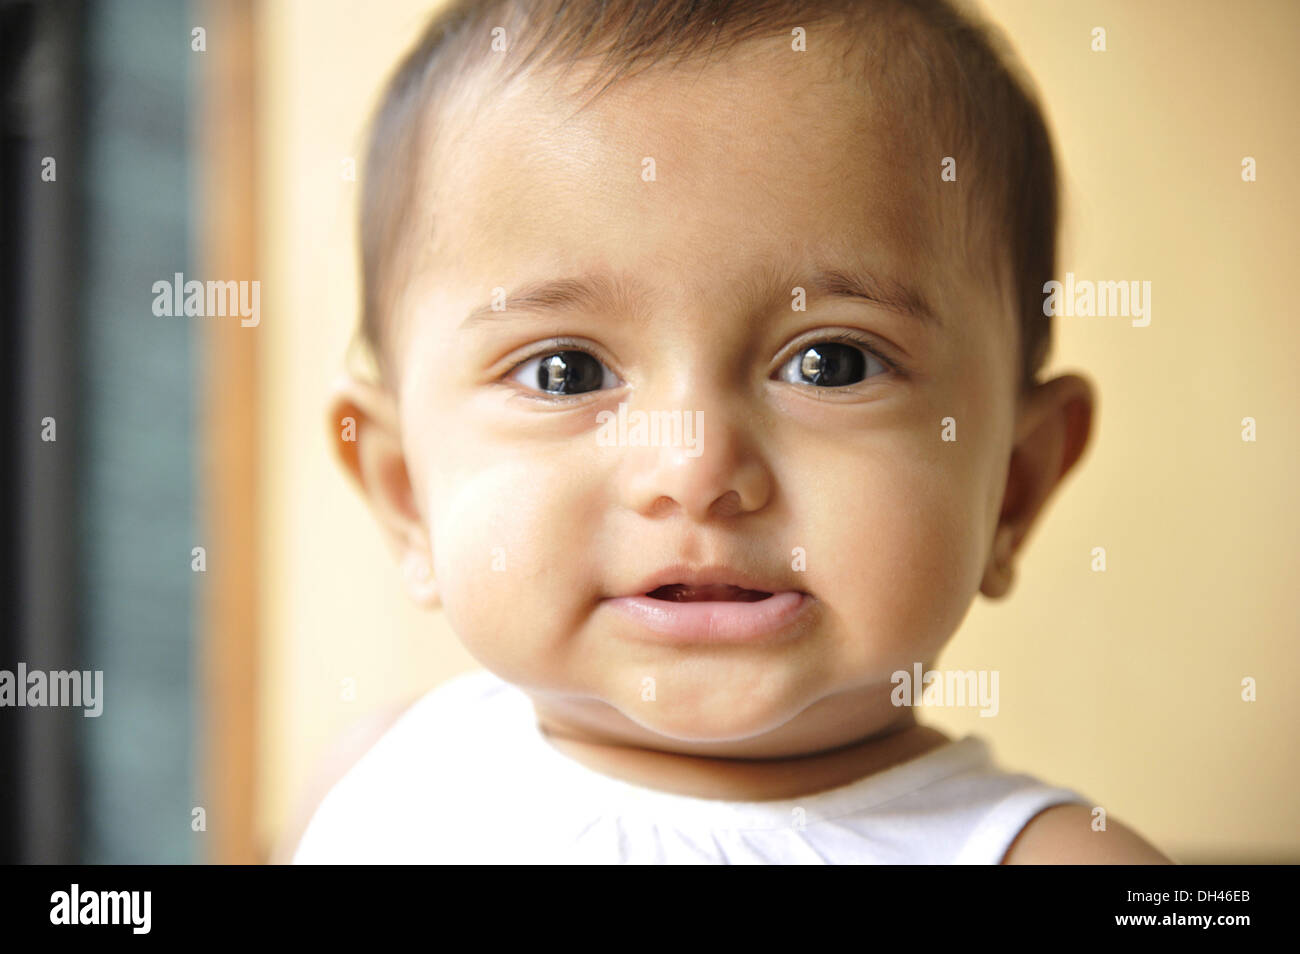 Indian baby face portrait closeup looking at camera eye contact India    MR#736LA Stock Photo